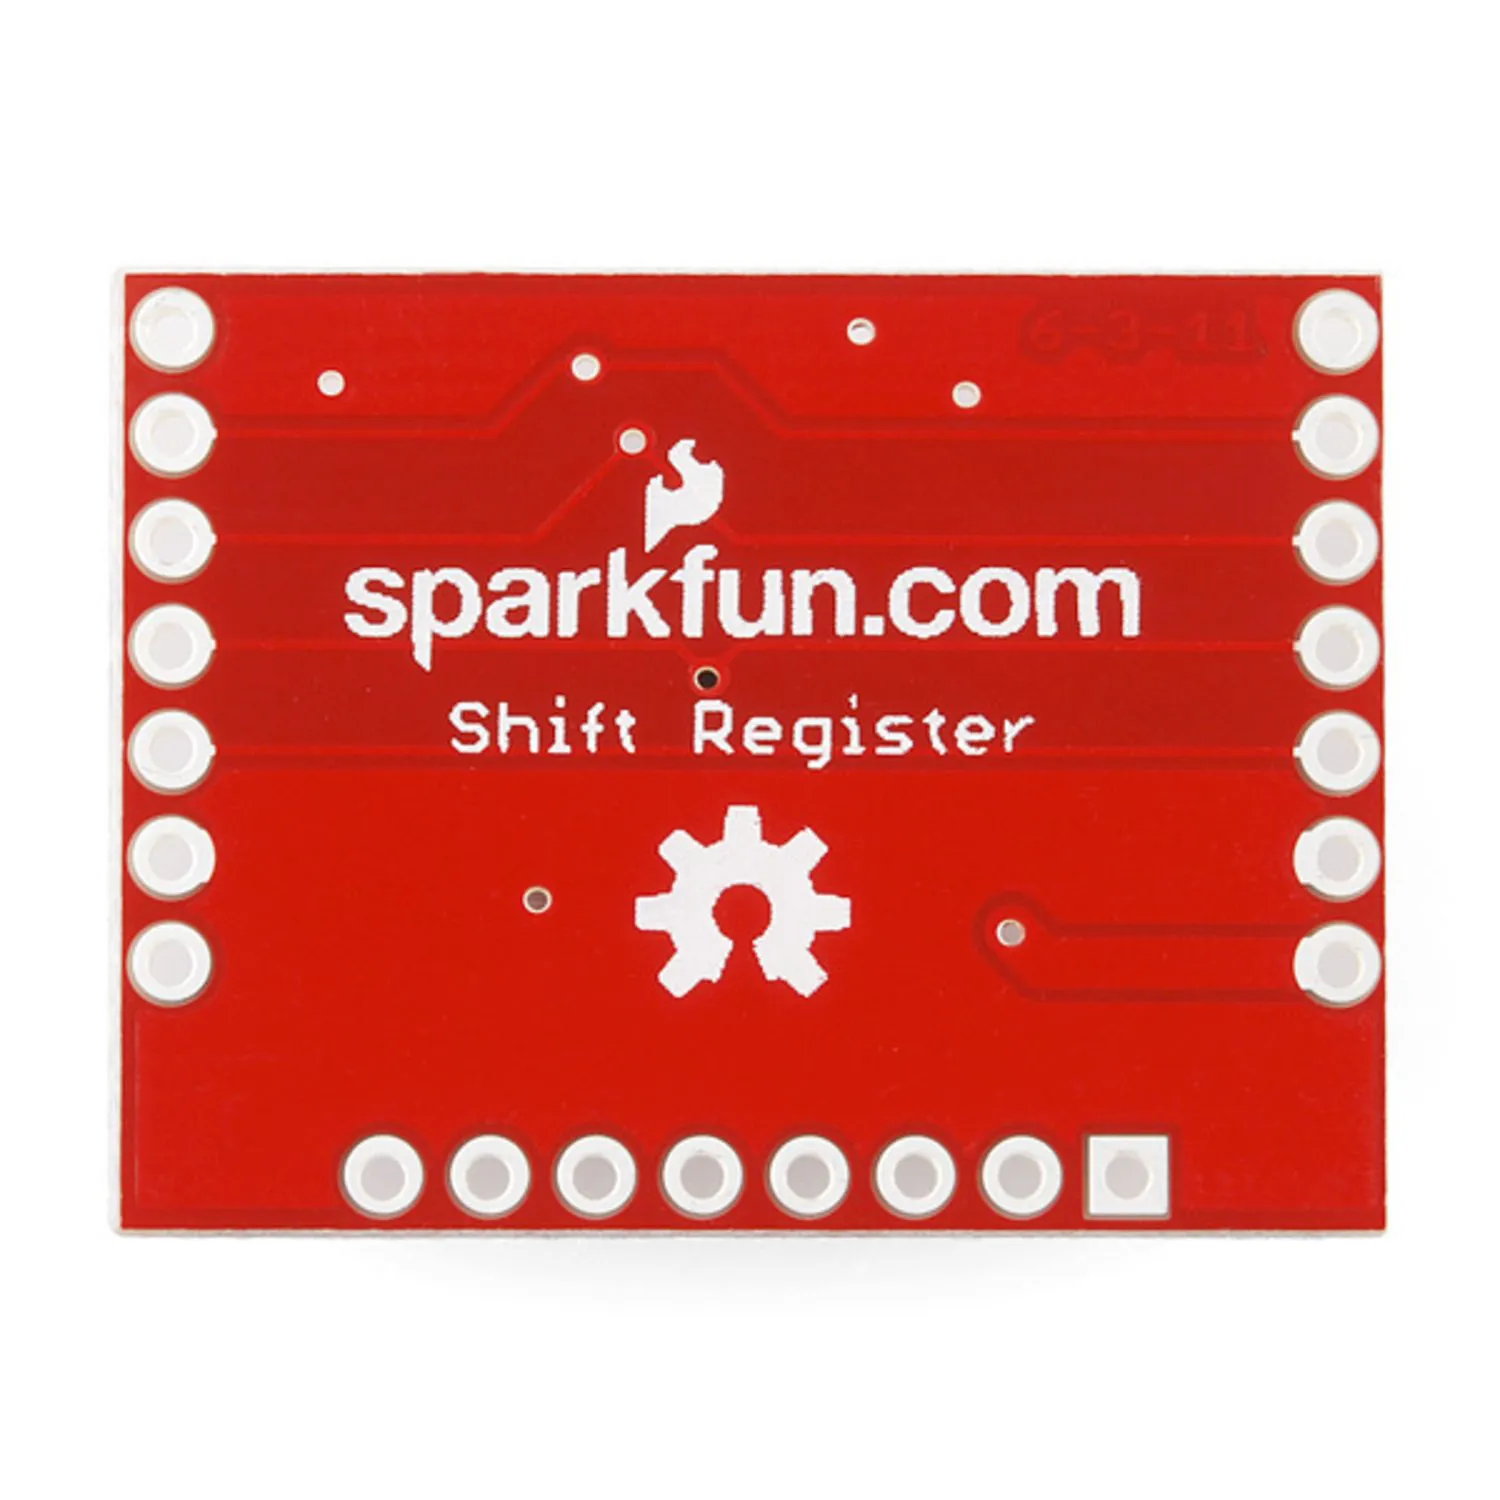 Photo of SparkFun Shift Register Breakout - 74HC595